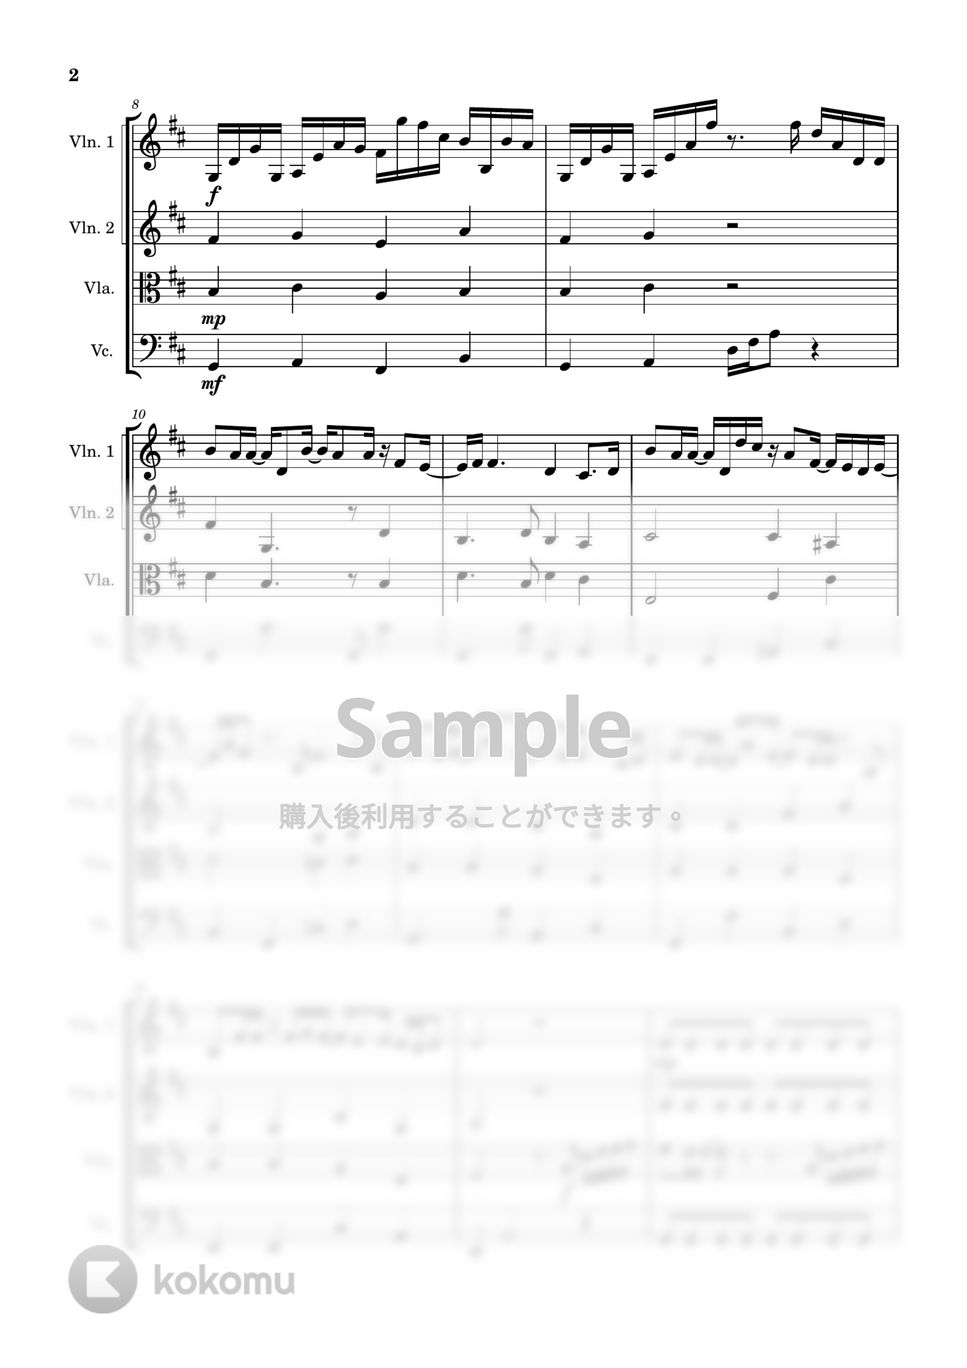 YOASOBI - アンコール (弦楽四重奏) by Cellotto